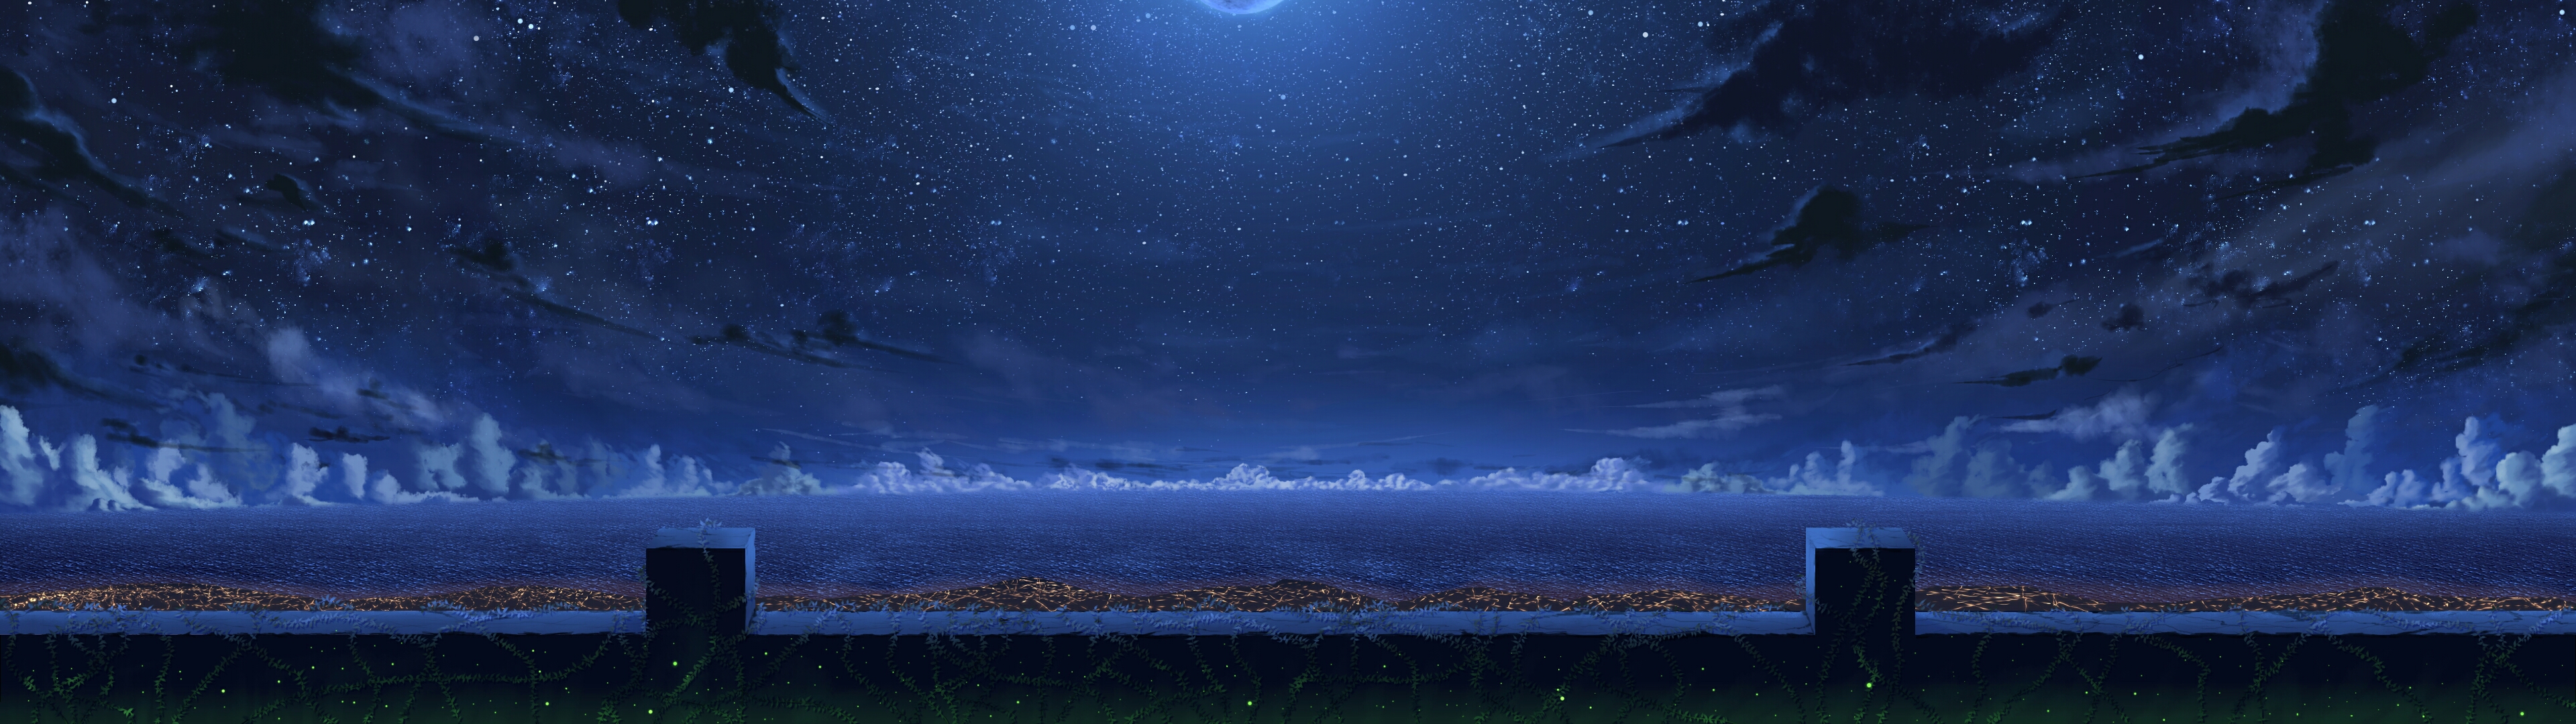 Panorama Artwork Sea Clouds Sky Stars 3840x1080 Wallpaper Wallhaven Cc